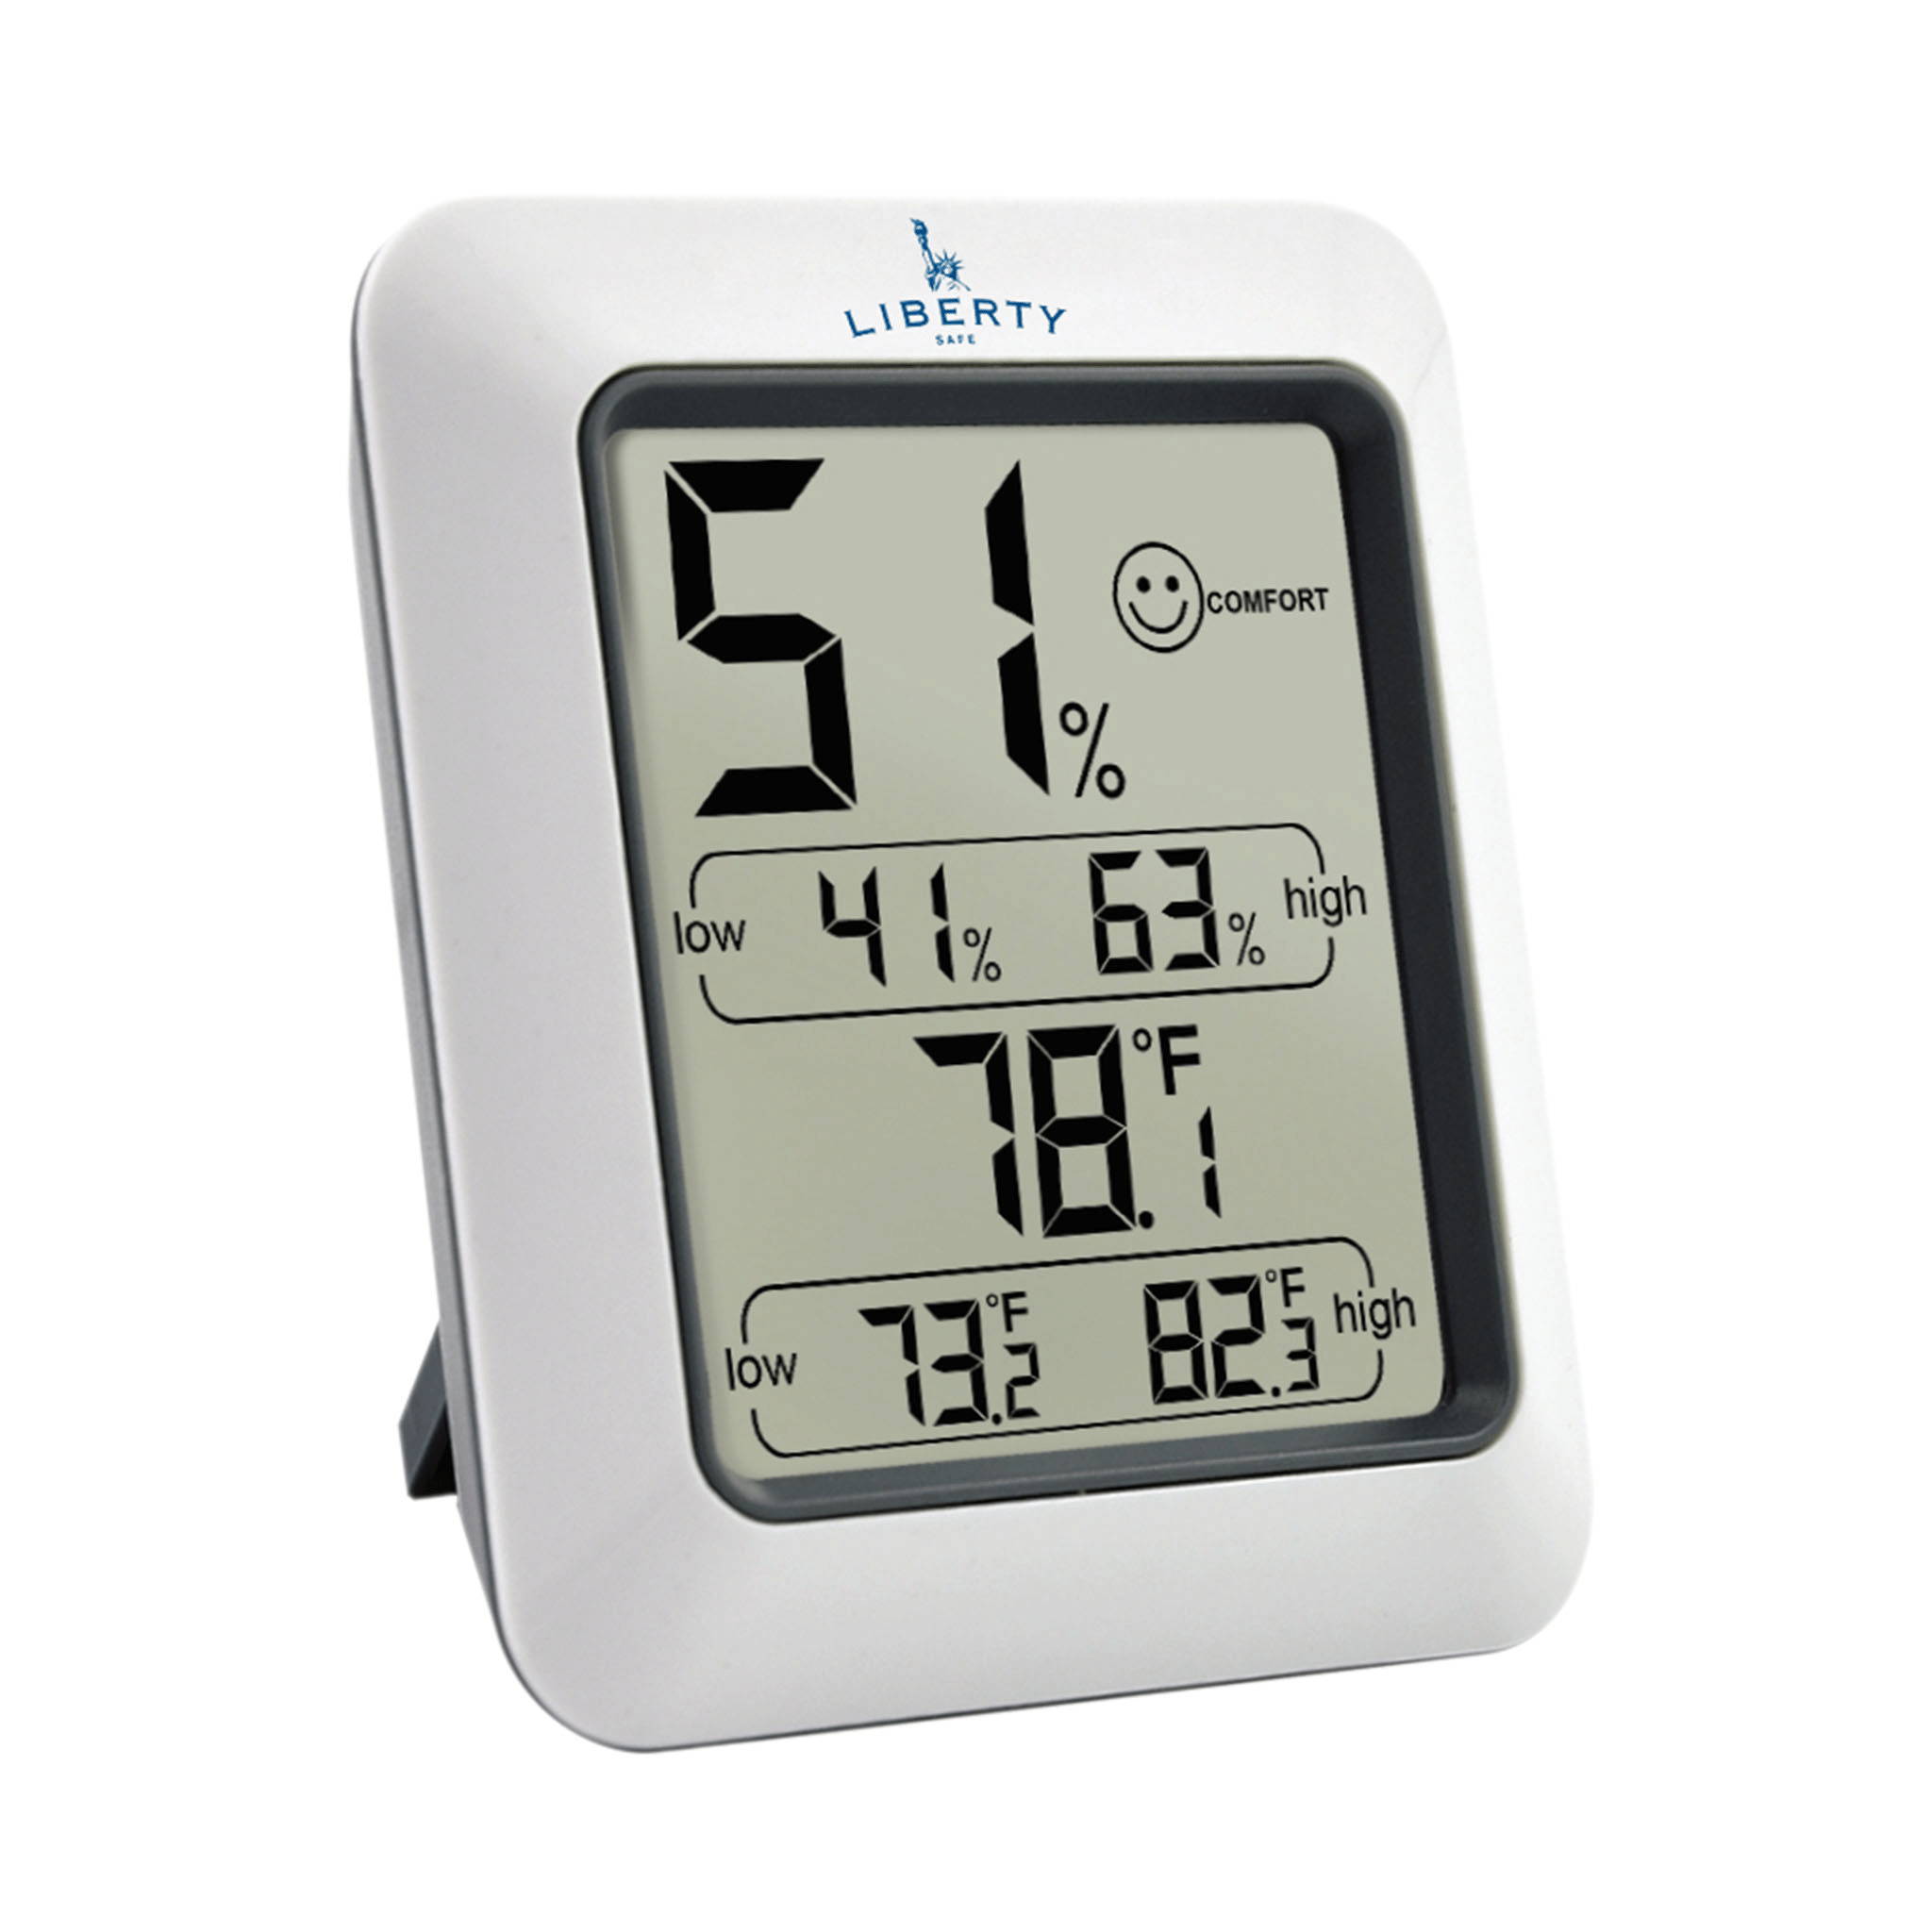 Humidity & Temperature control monitor